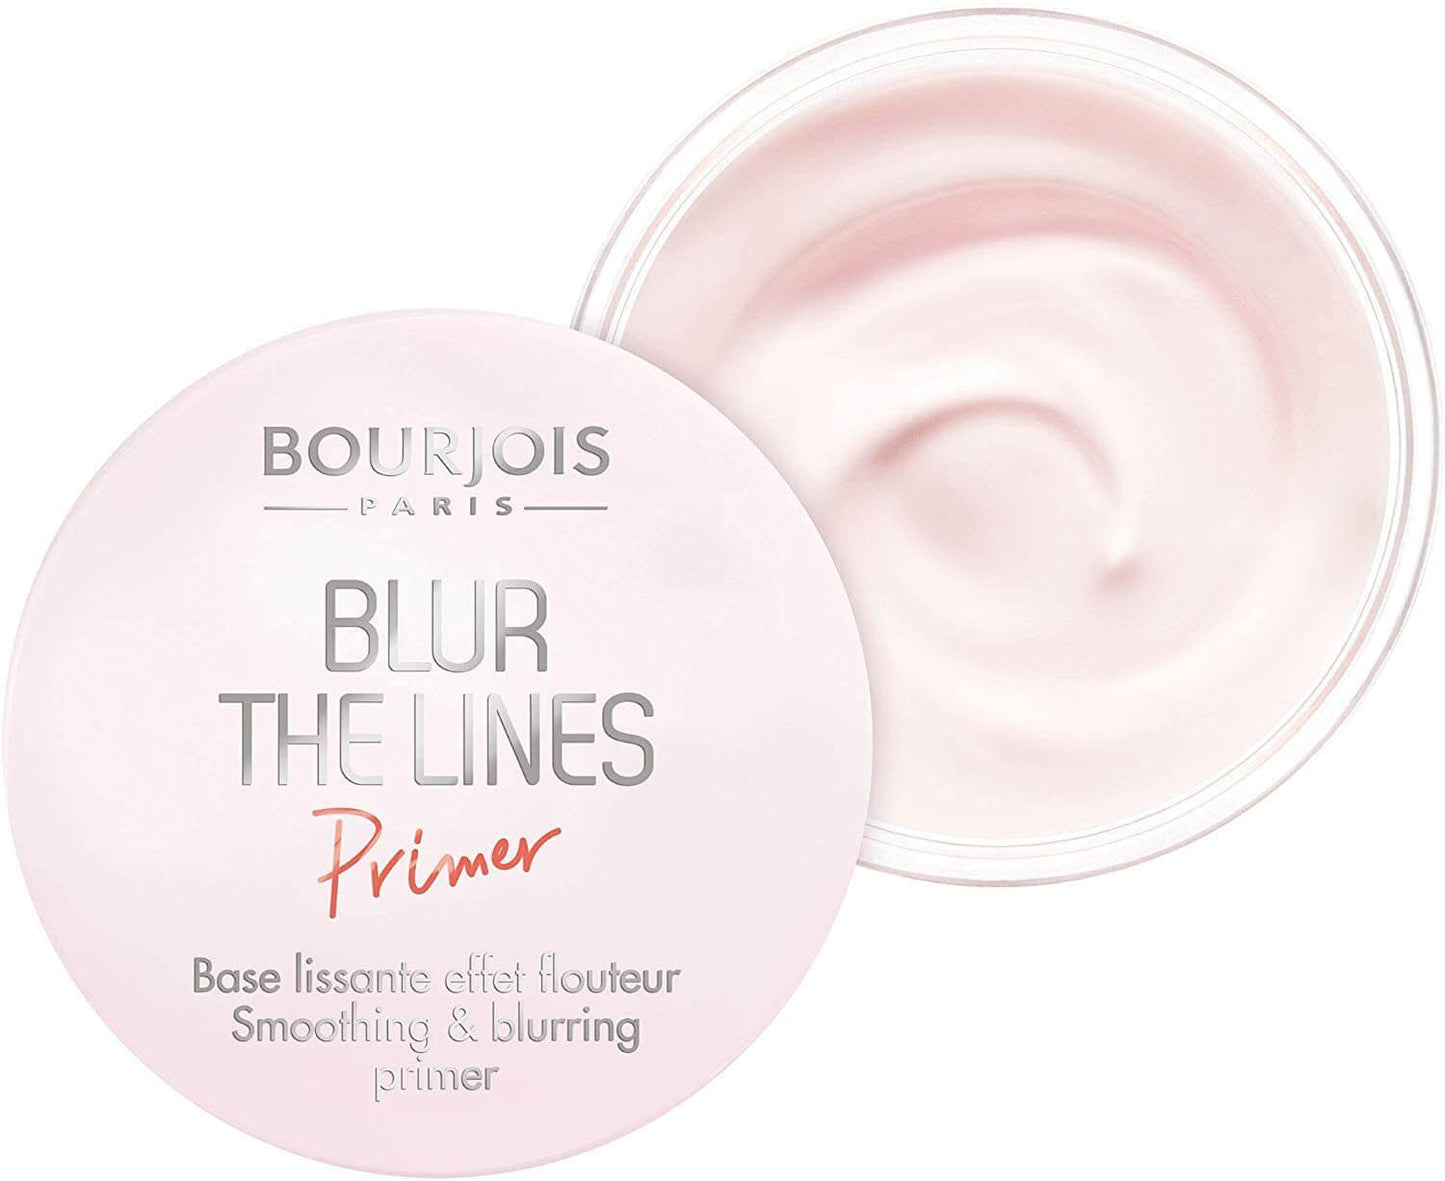 Bourjois Blur the lines Primer 00 Universal Shade